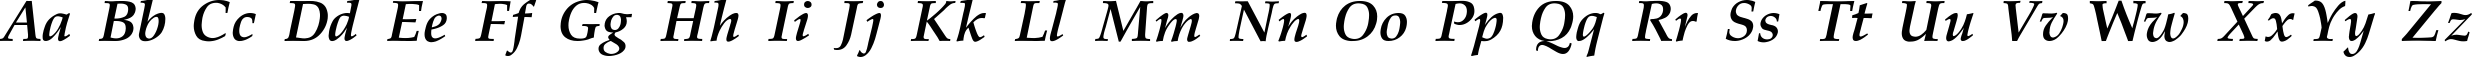 Пример написания английского алфавита шрифтом Palatino-Bold-Italic